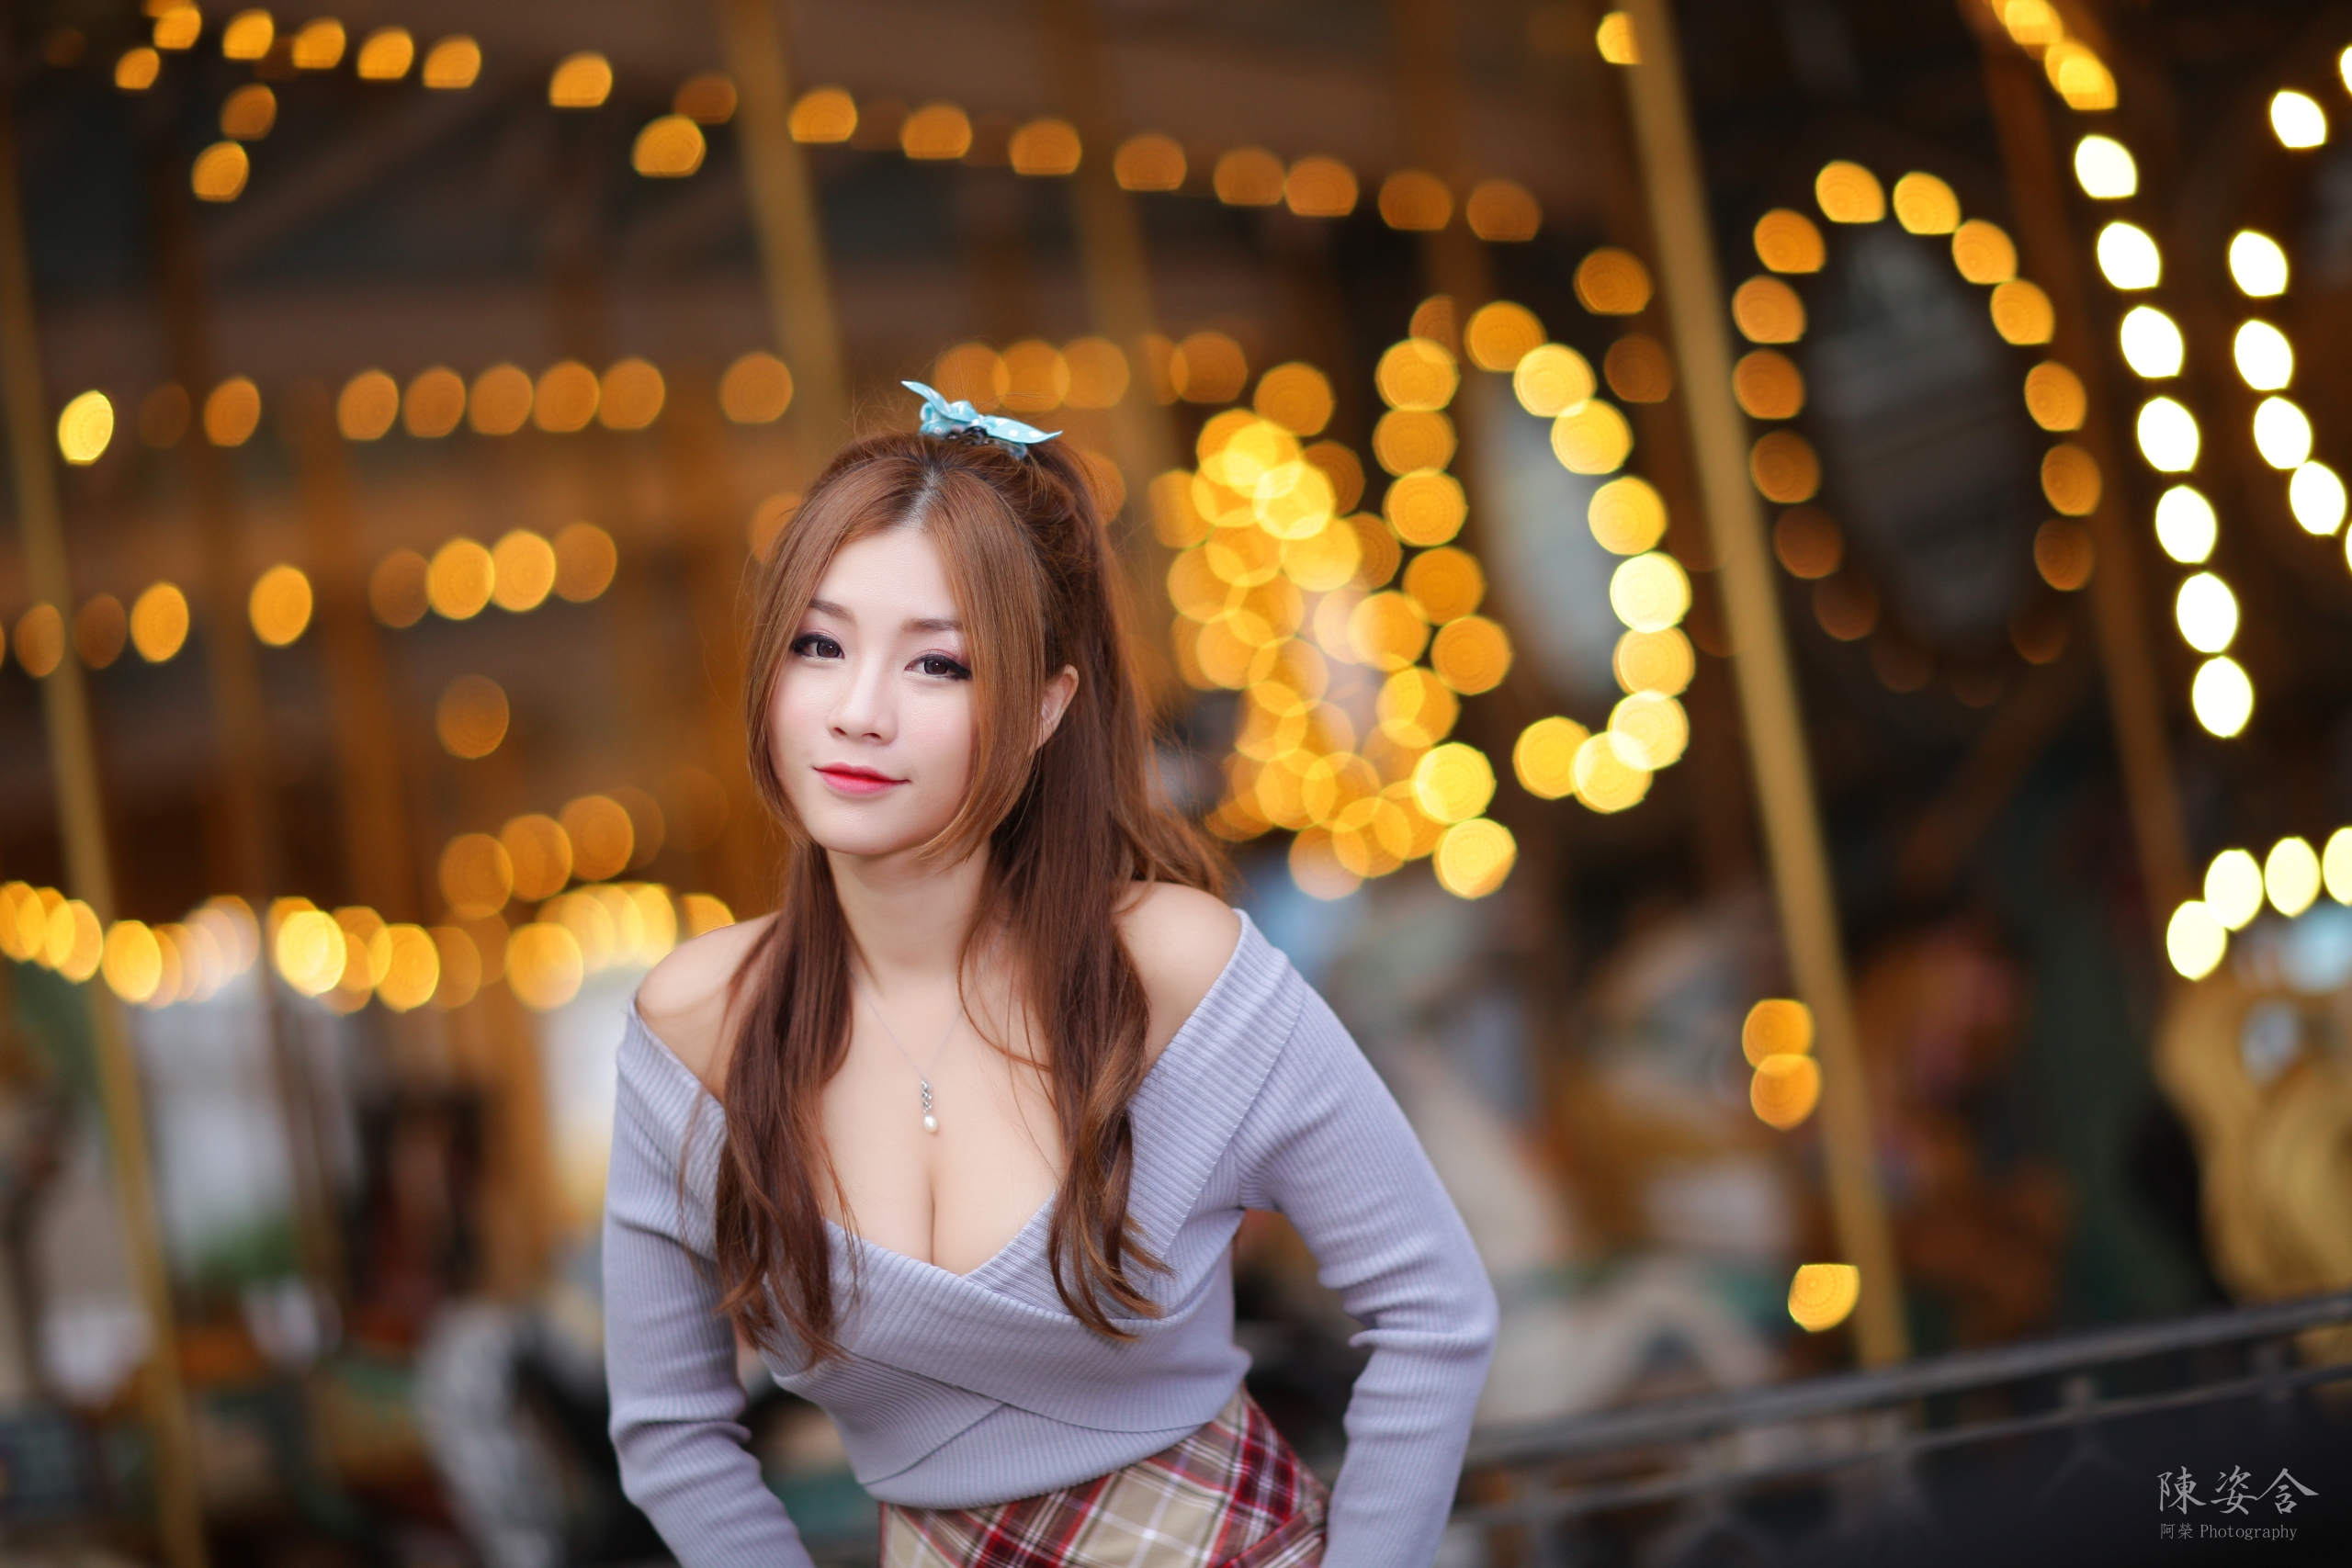 Karry Chen Women Model Brunette Long Hair Looking At Viewer Smiling Portrait Asian Bare Shoulders Ne 2560x1707